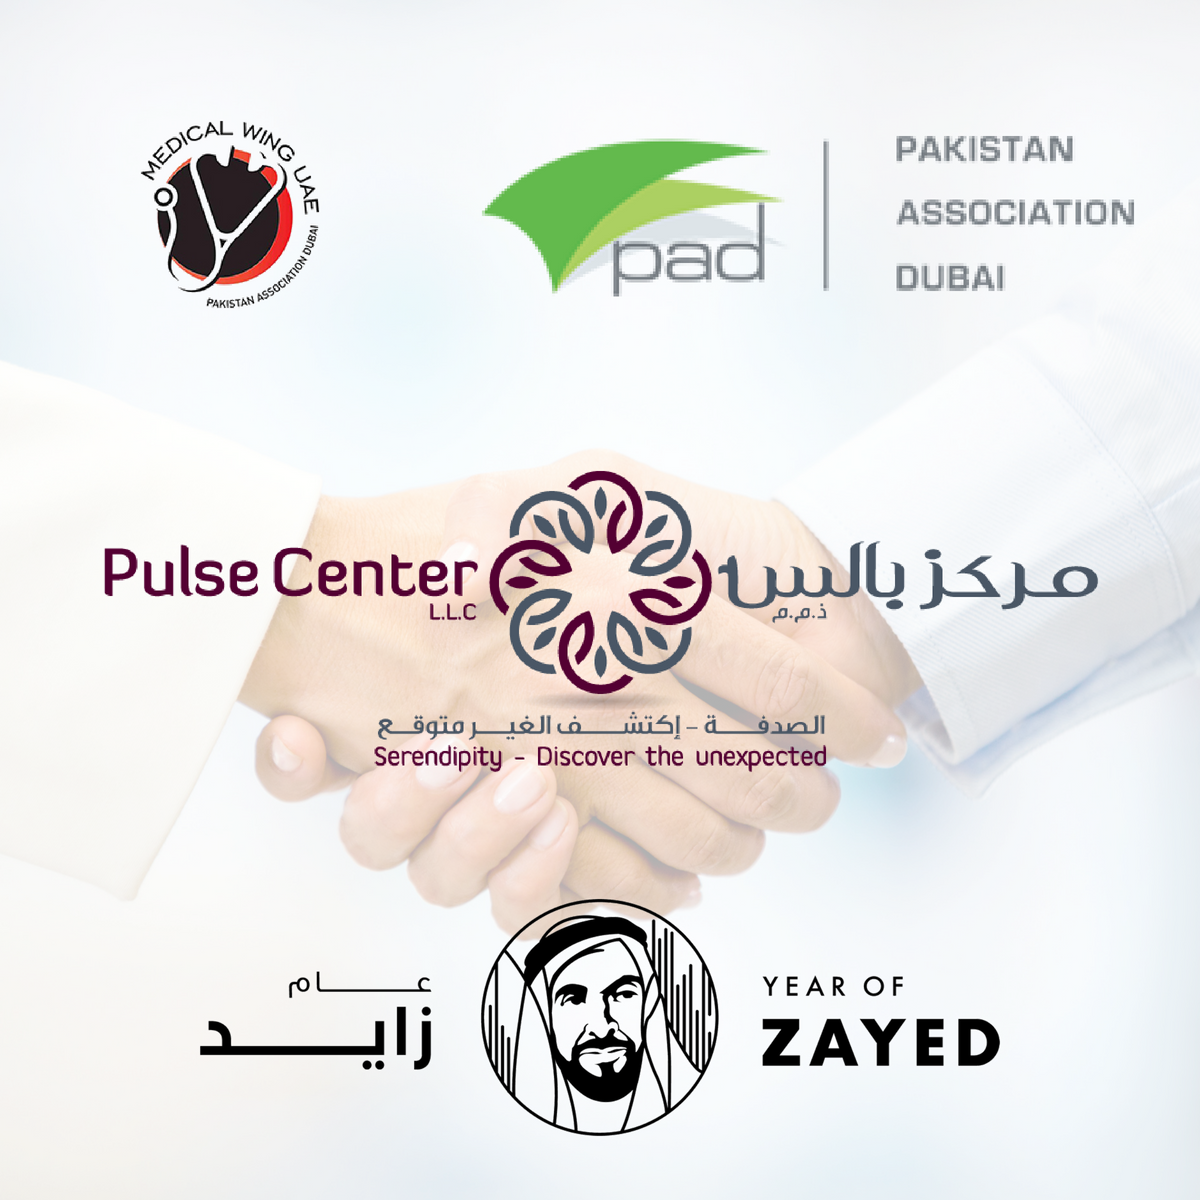 Pulse Center signs MoU with Pakistan Association Dubai